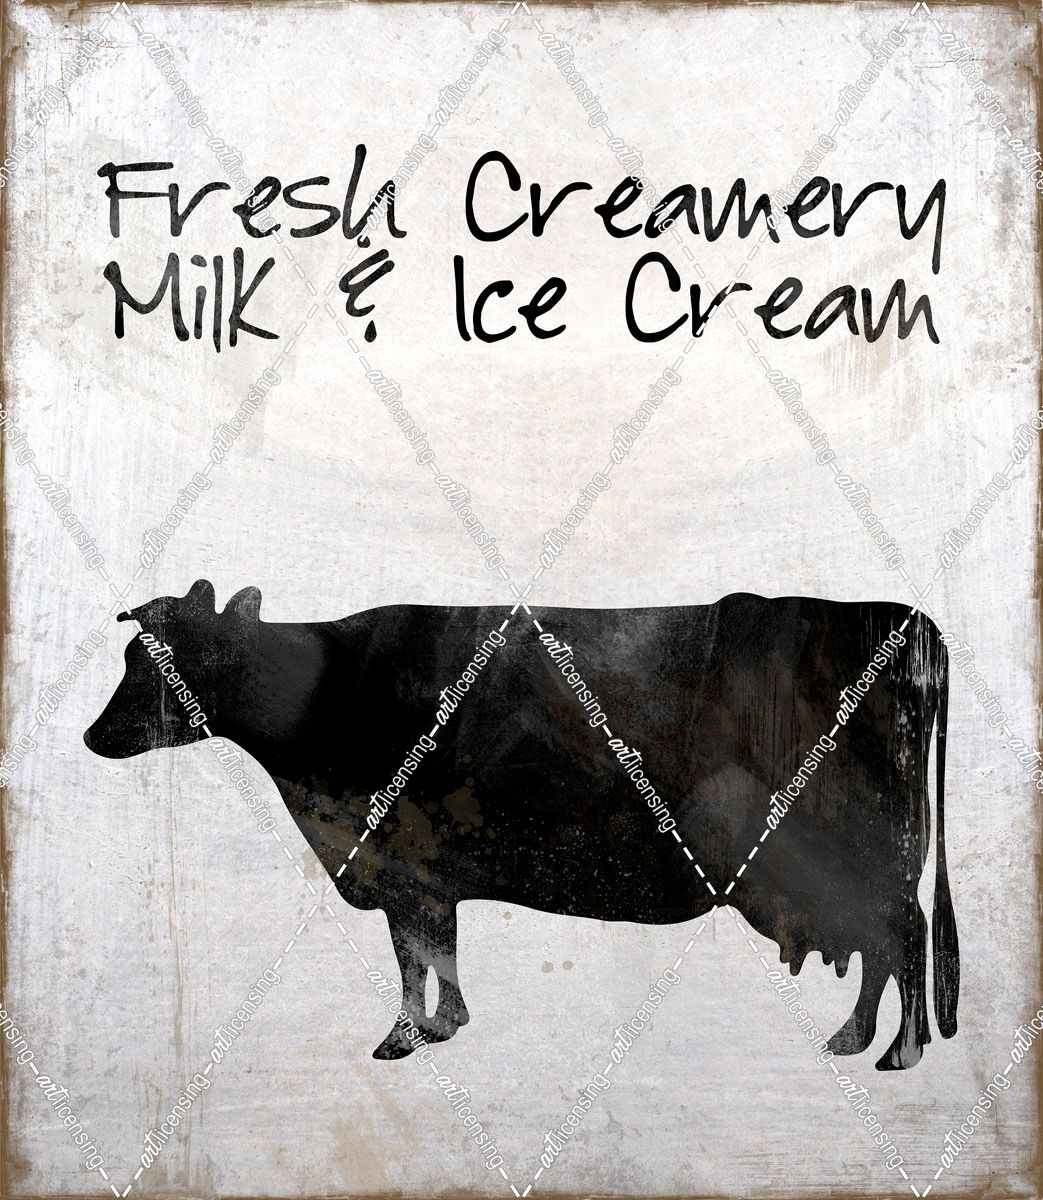 Fresh Creamery Milk & Ice Cream